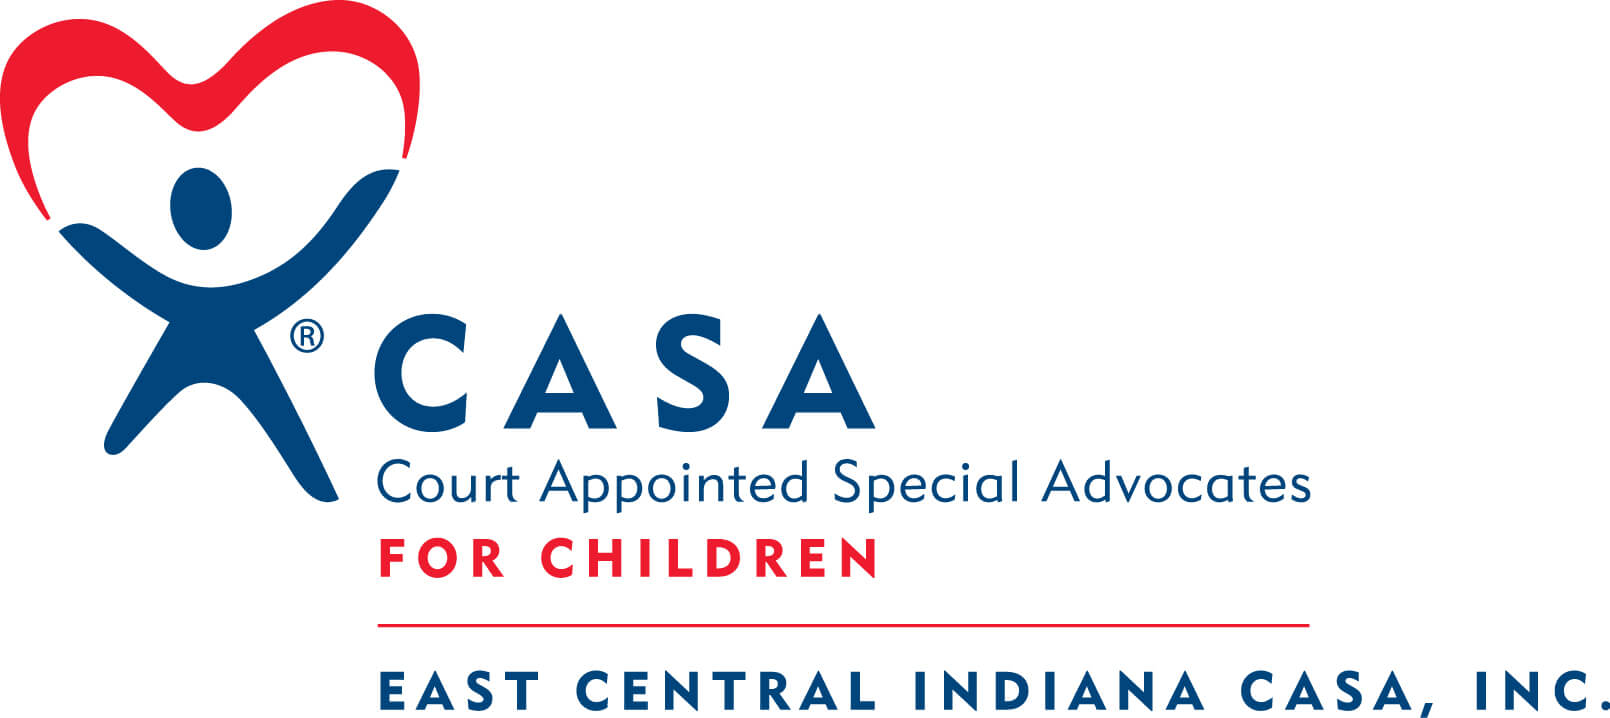 East Central Indiana CASA, Inc